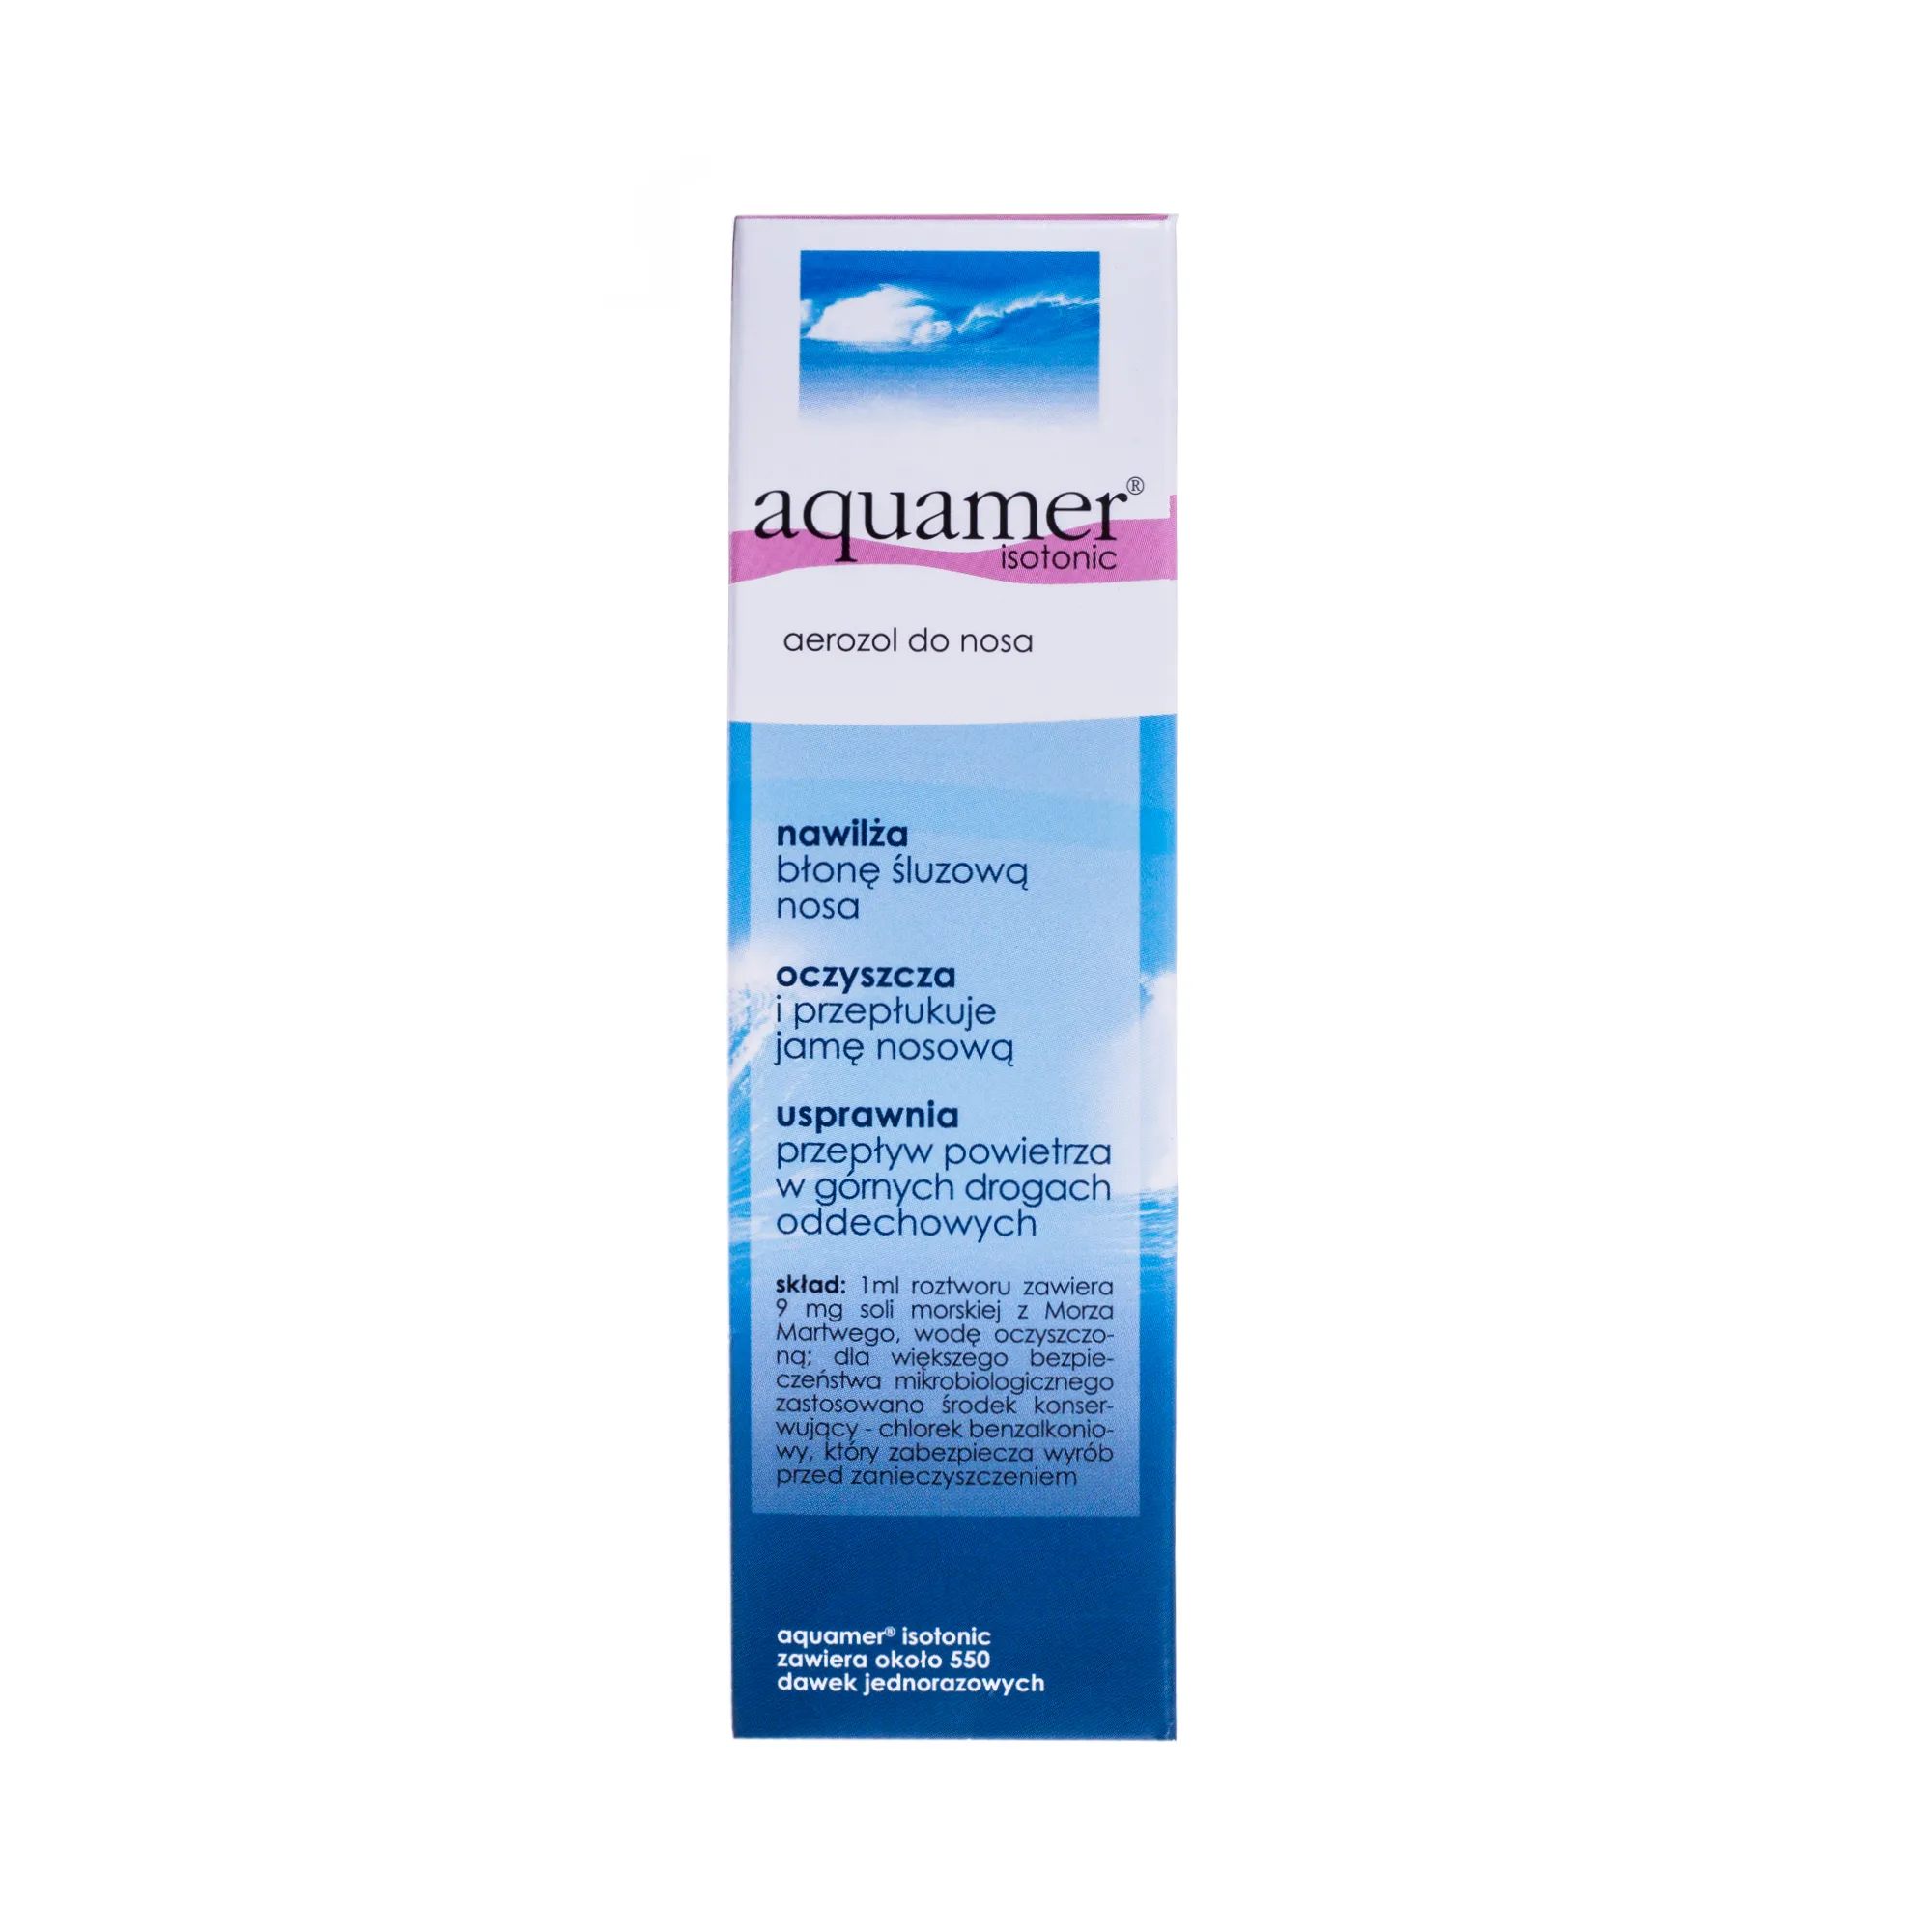 Aquamer Isotonic, aerozol do nosa, 50 ml 